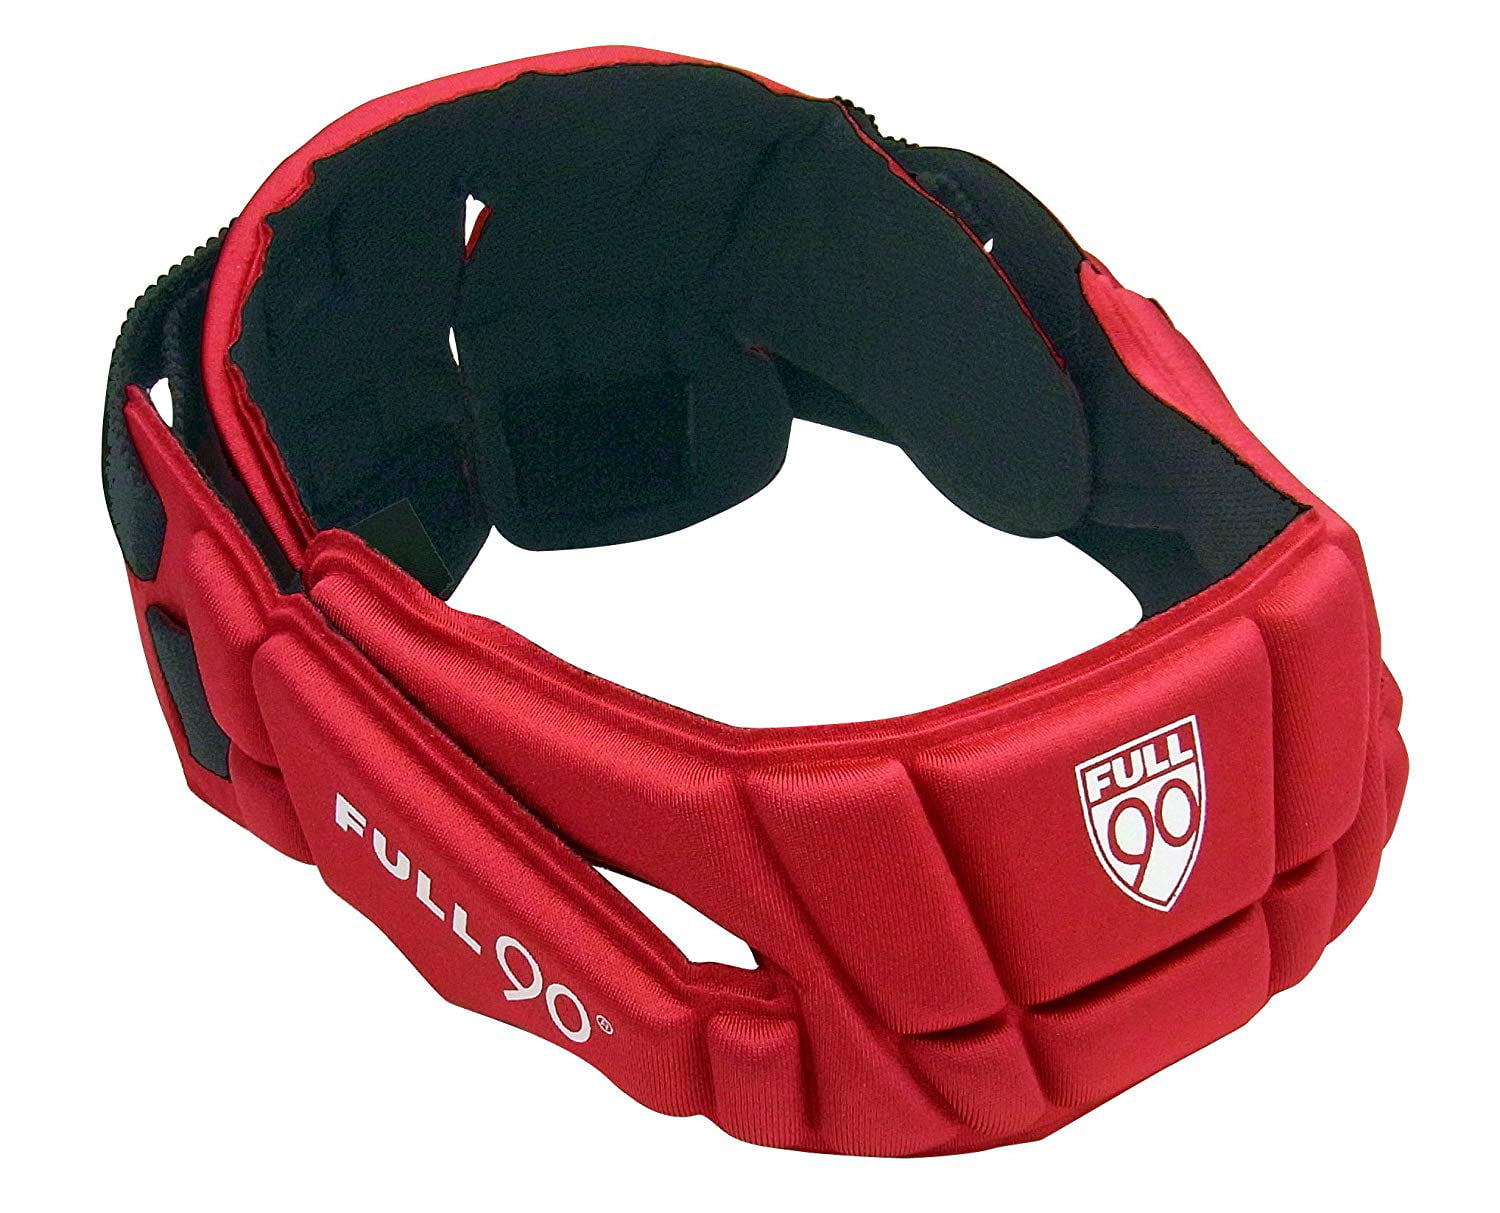 Full90 Sports Select Performance Soccer Headgear 